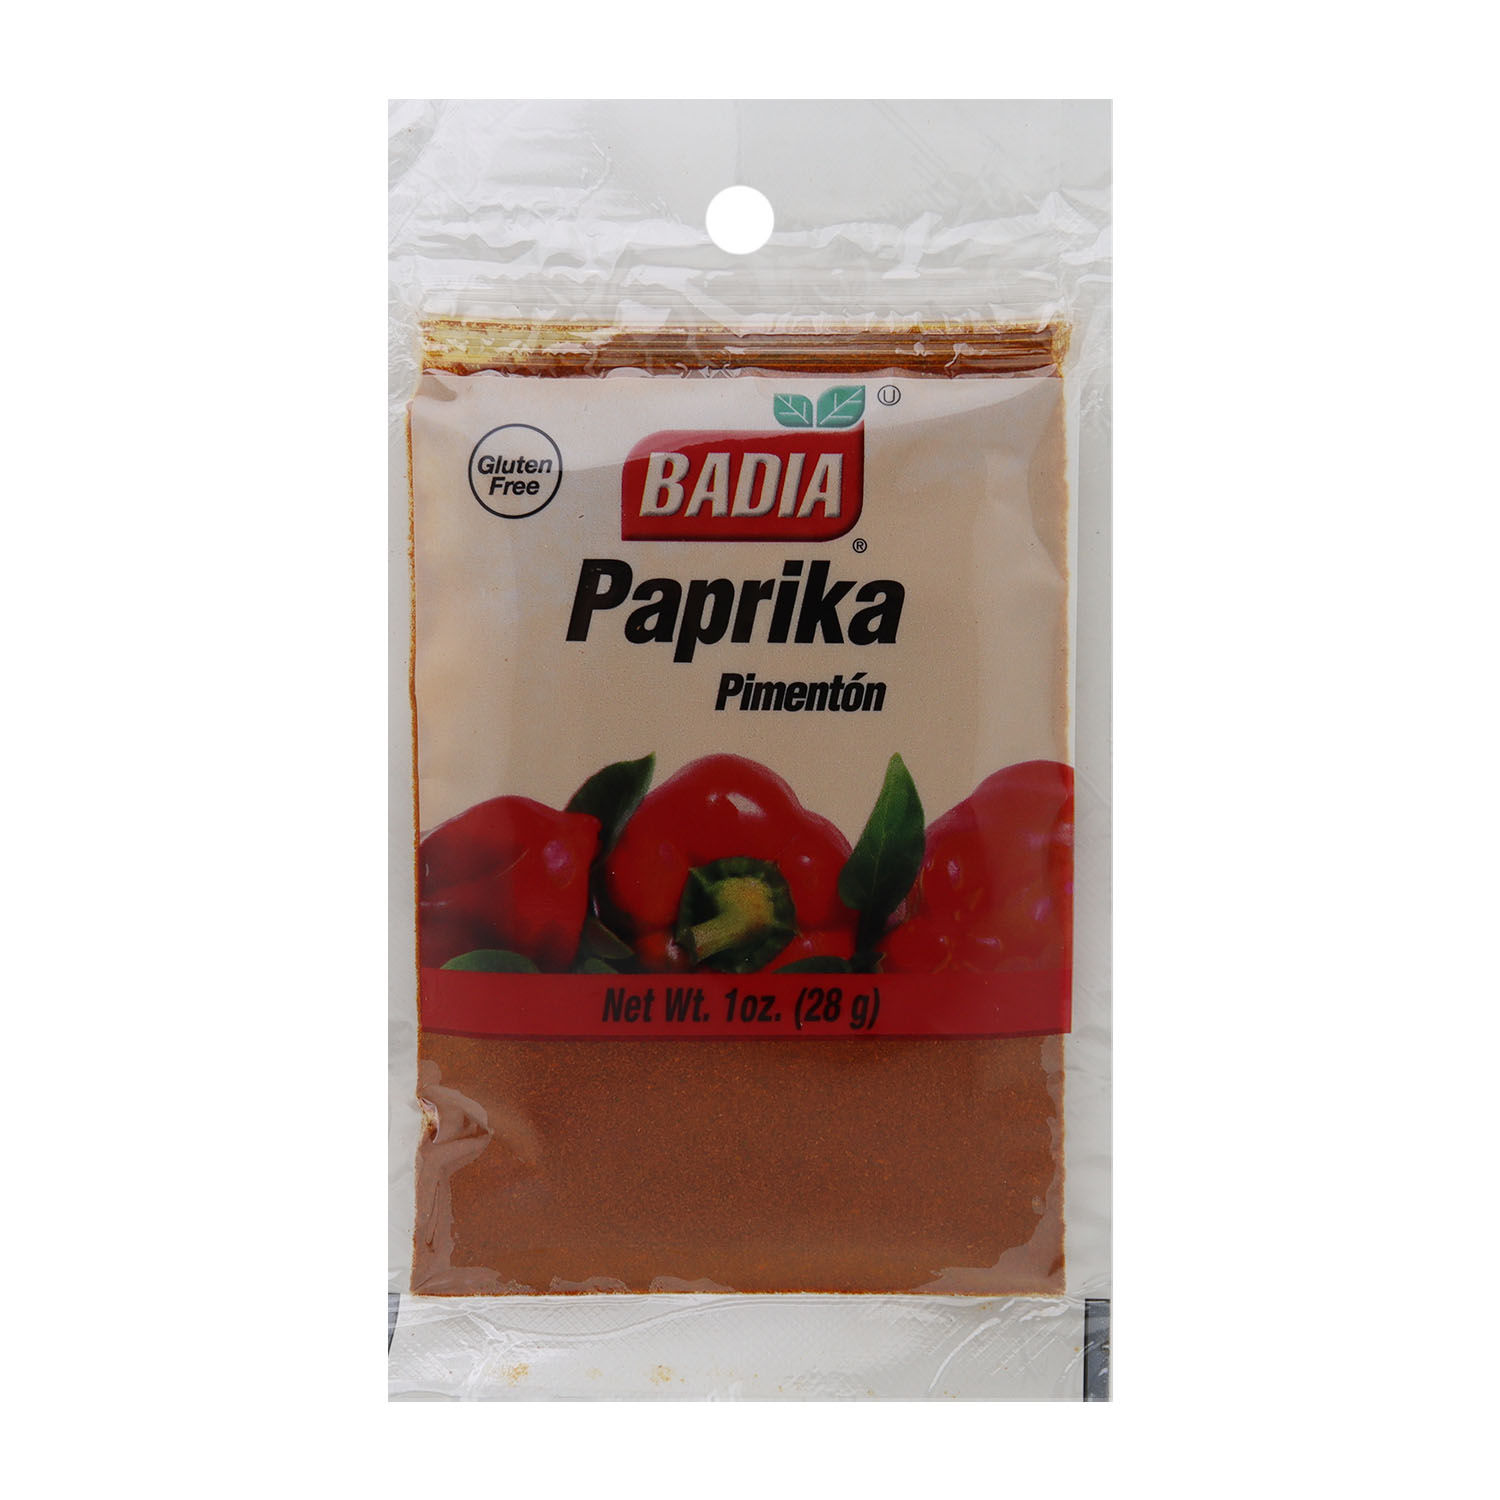 Pimienton Paprika Badia Paquete 28 G